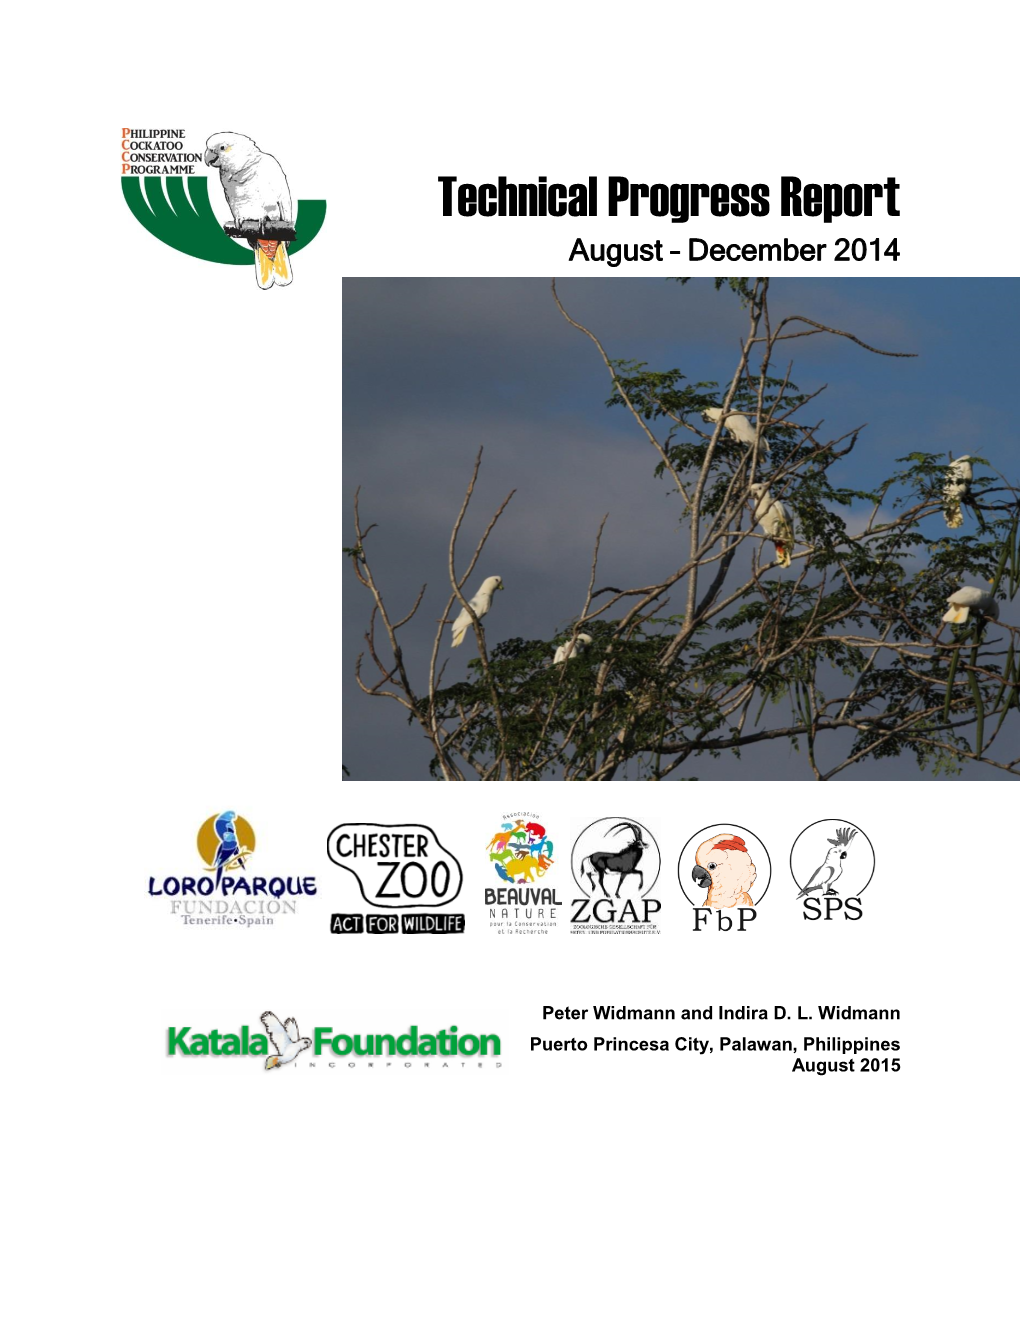 PCCP Technical Progress Report August to December 2014 Katala Foundation Inc